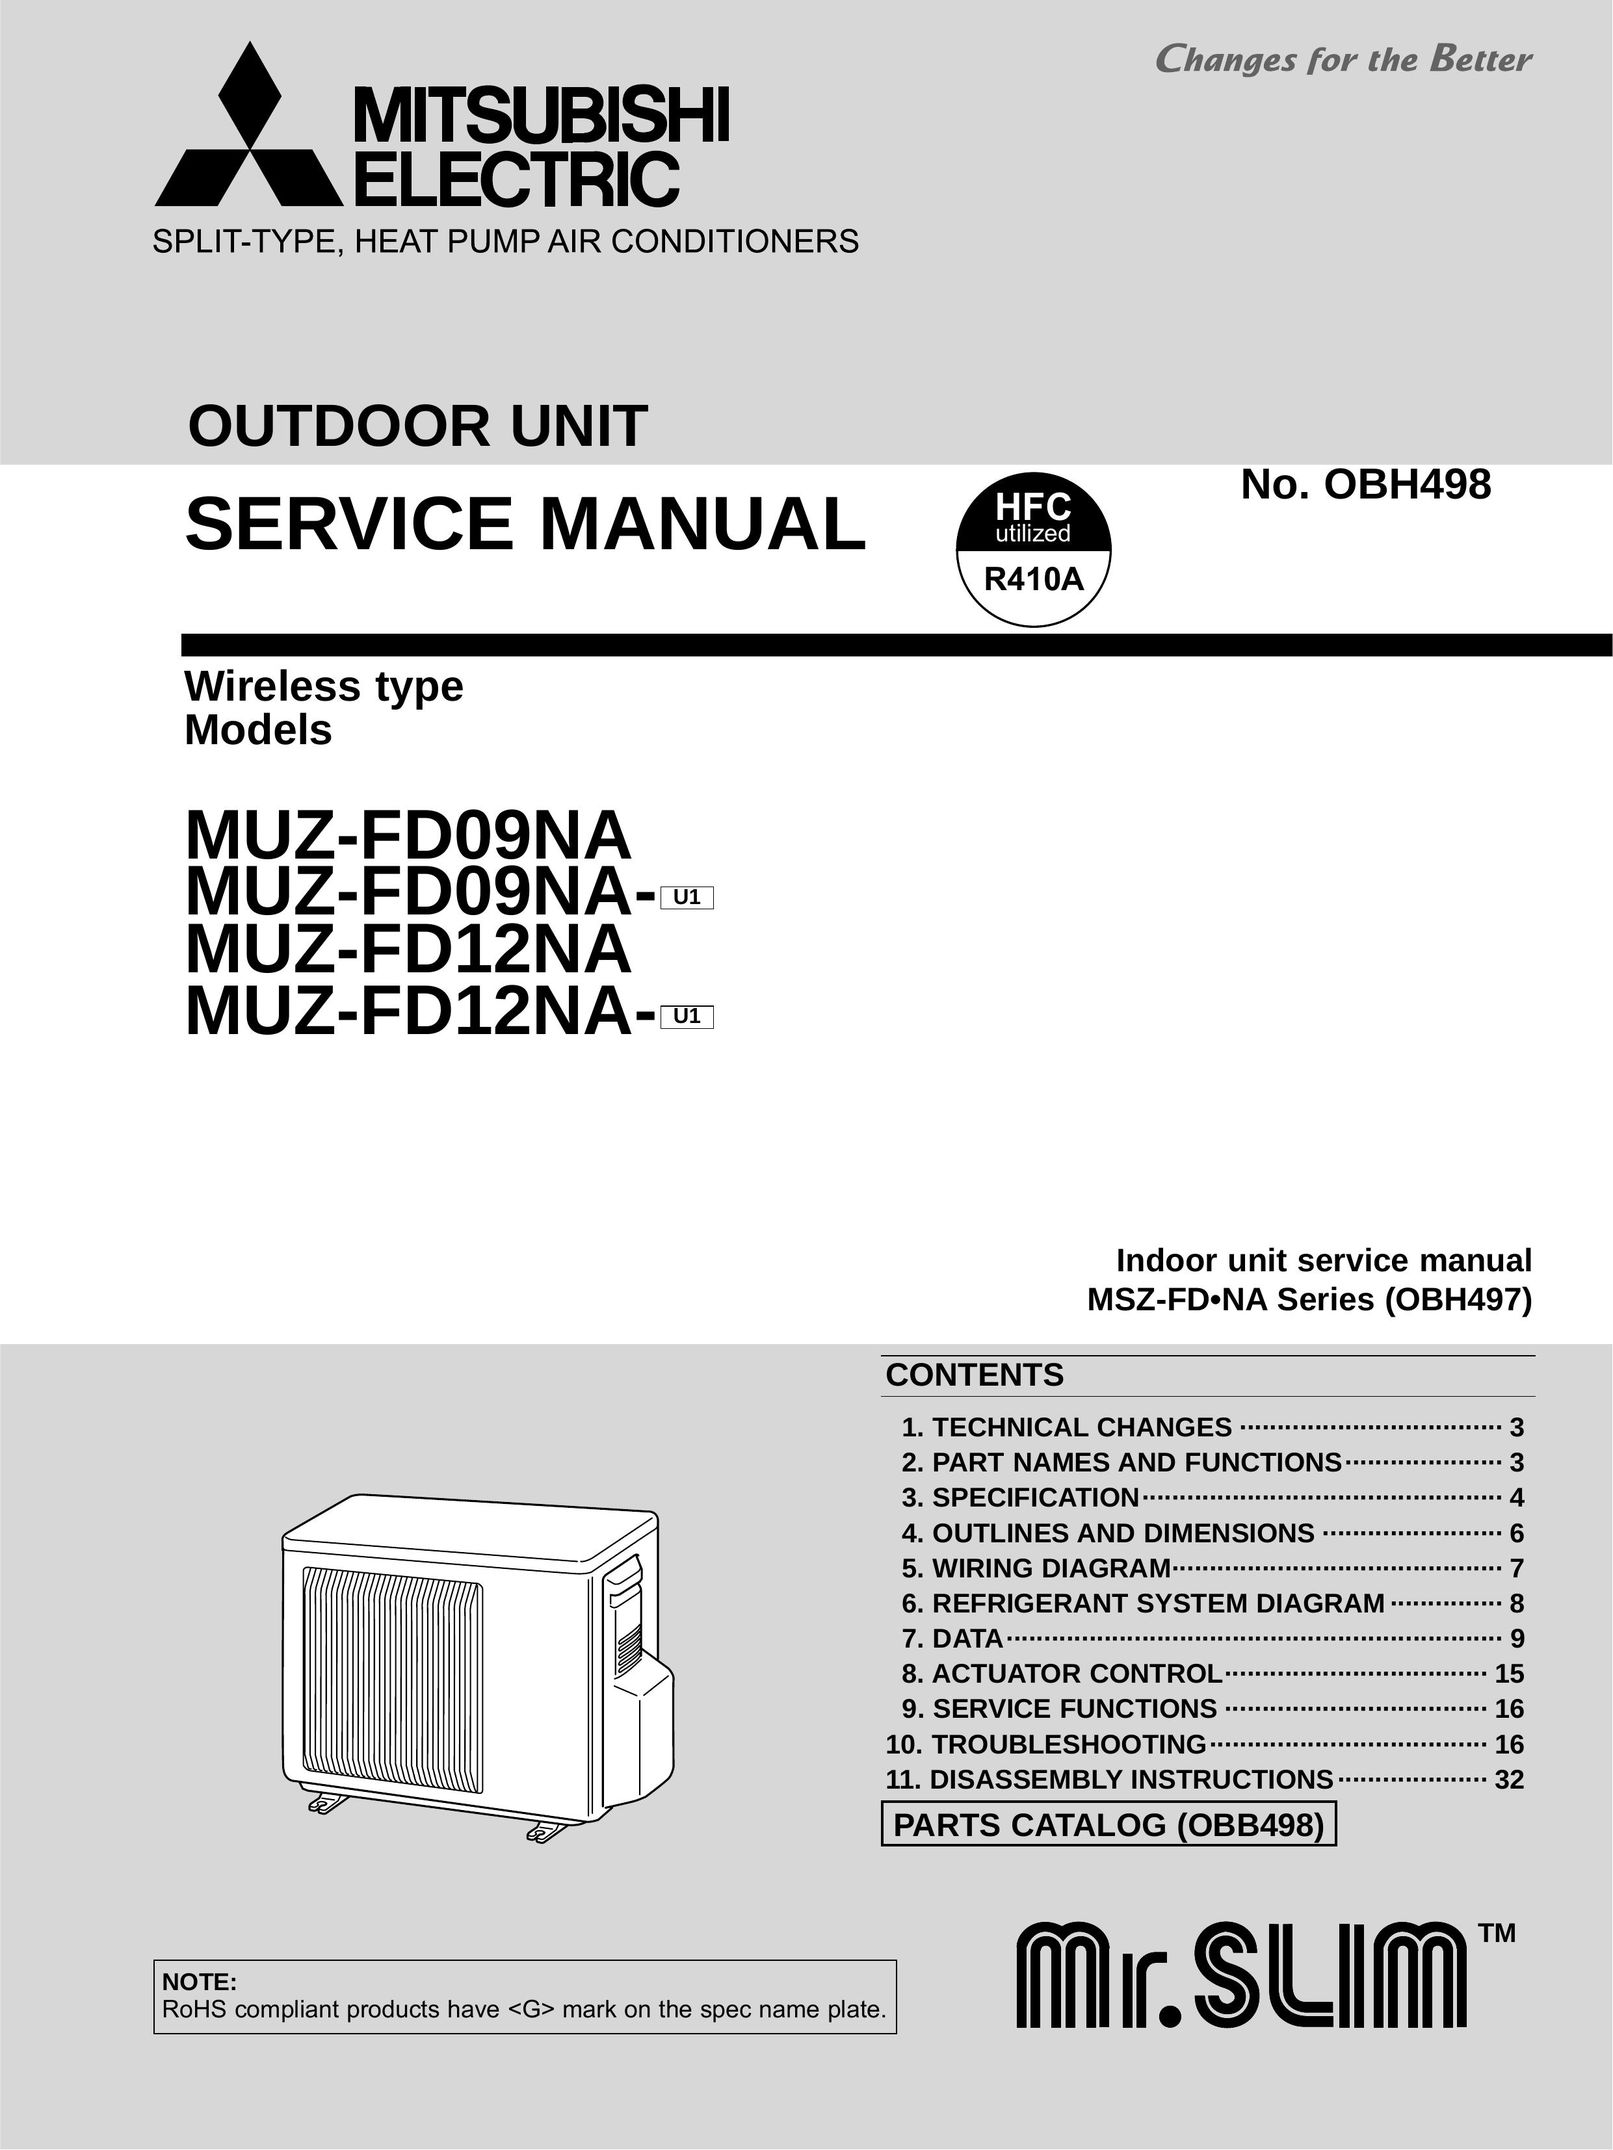 Black & Decker MUZ-FD12NA- U1 Air Conditioner User Manual